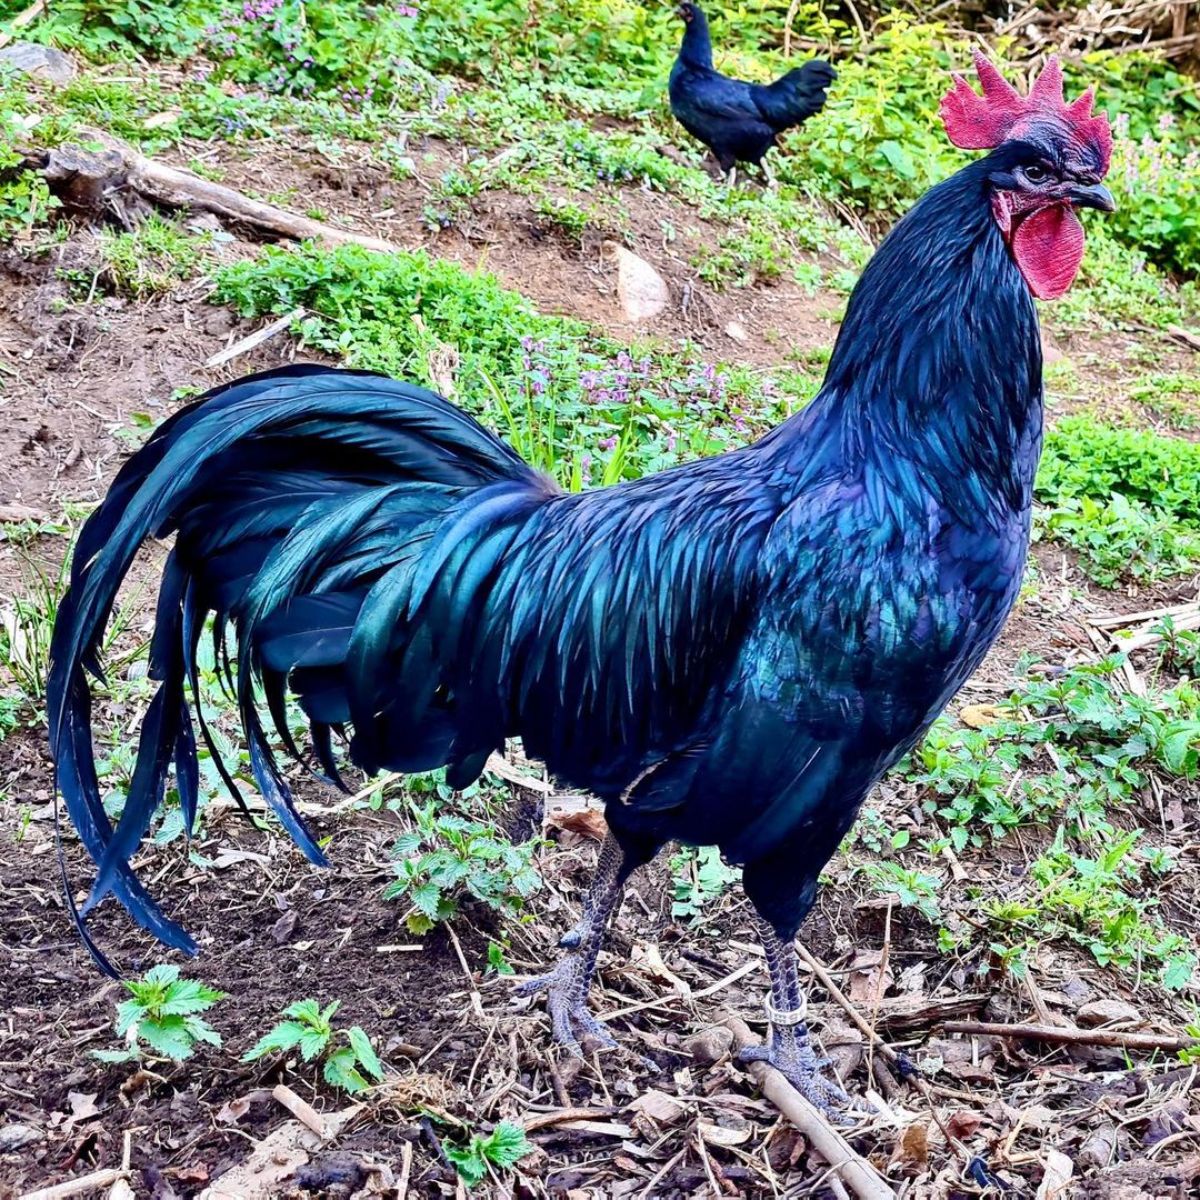 A beautiful black Tomaru rooster in a backyard.